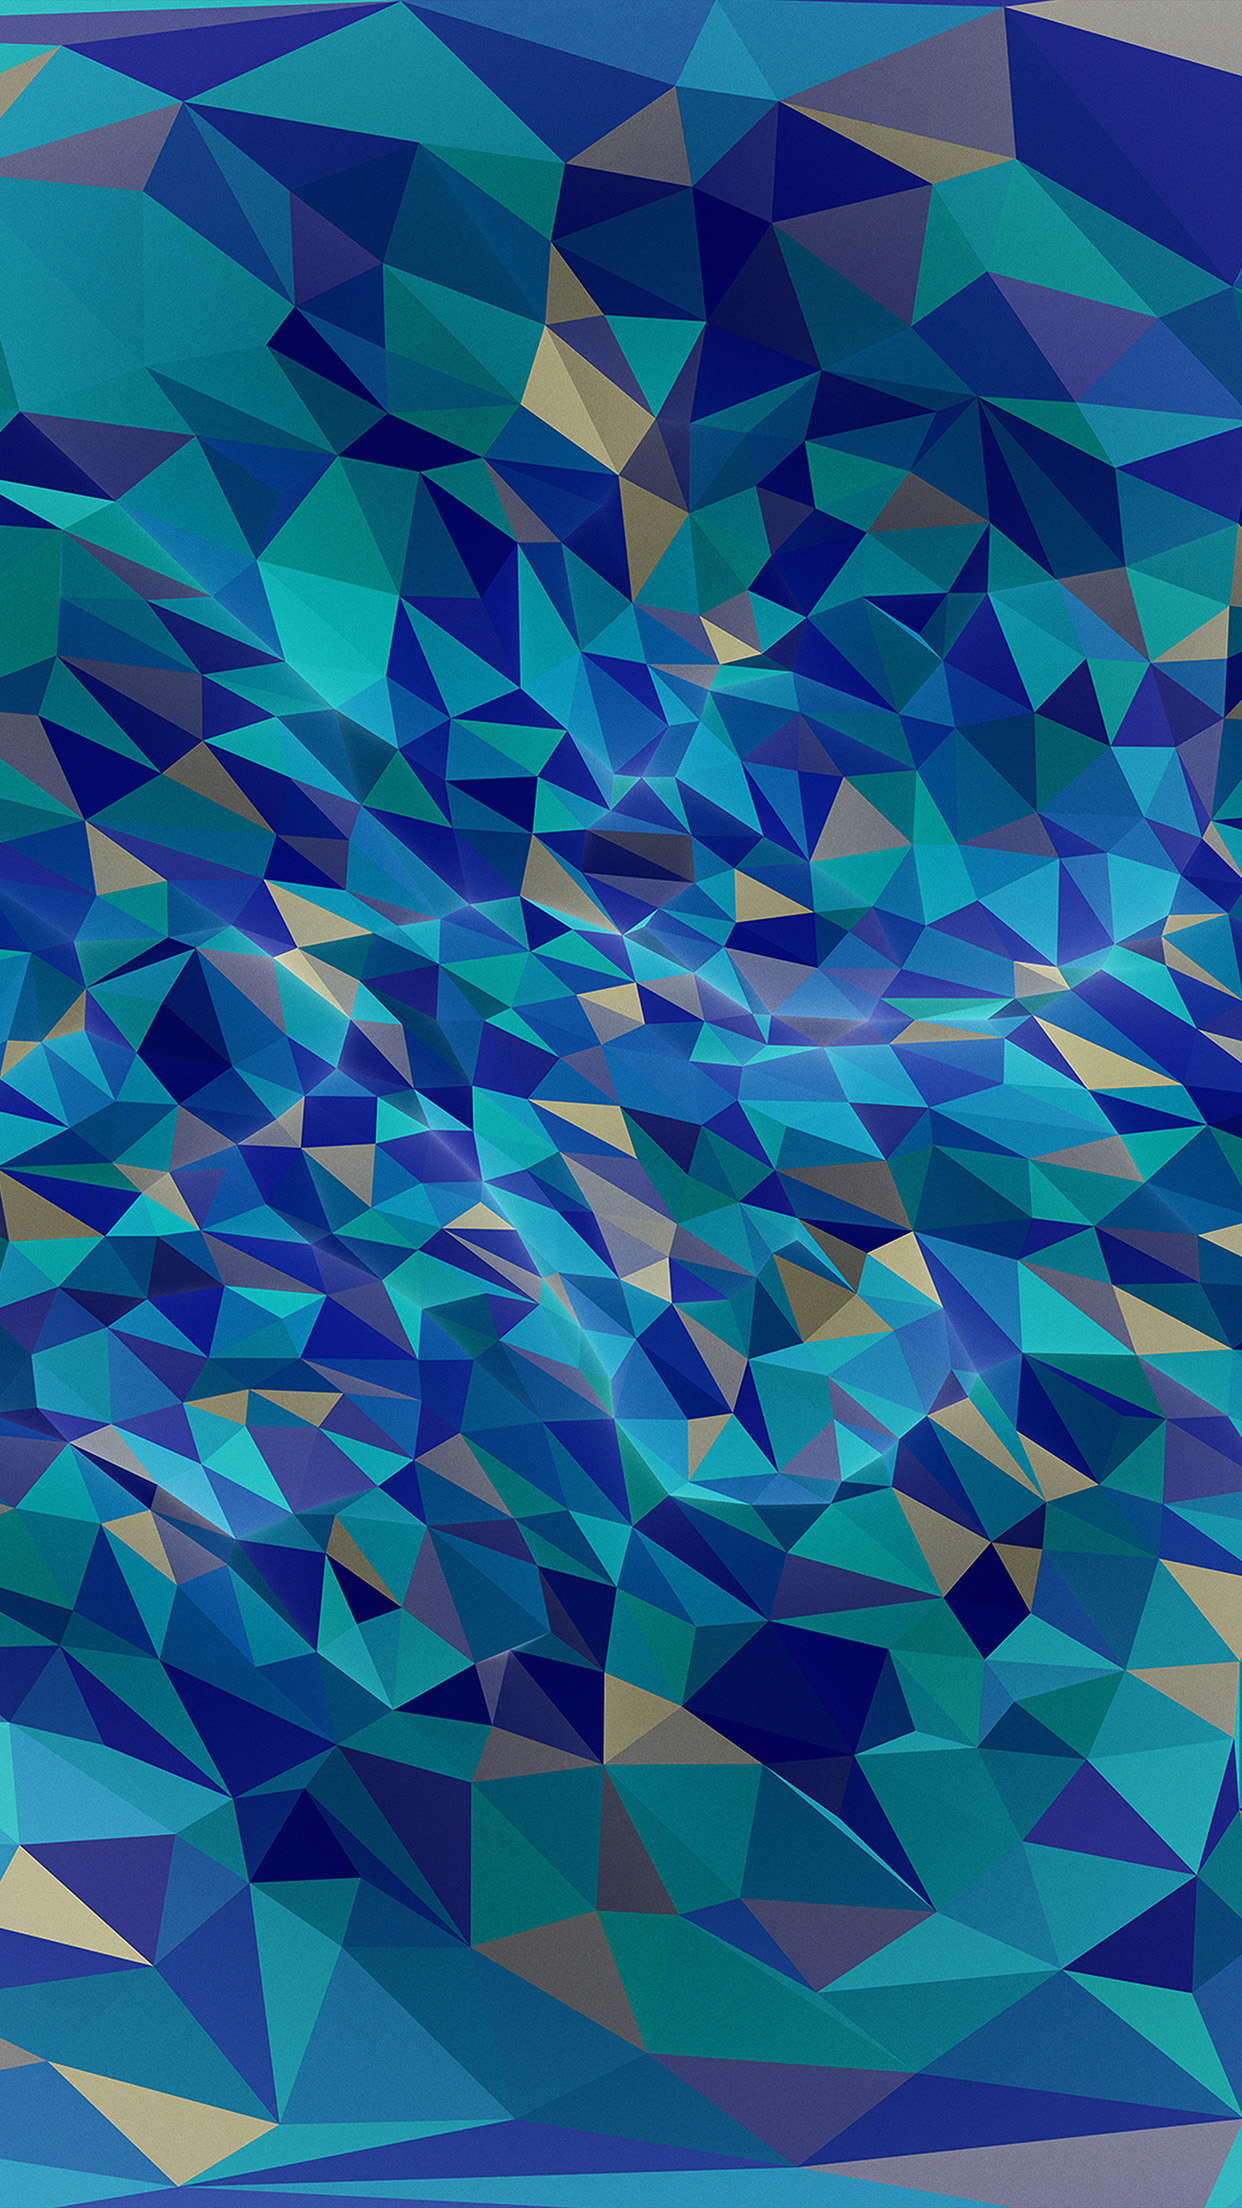 wallpaper pattern,blue,aqua,cobalt blue,turquoise,teal